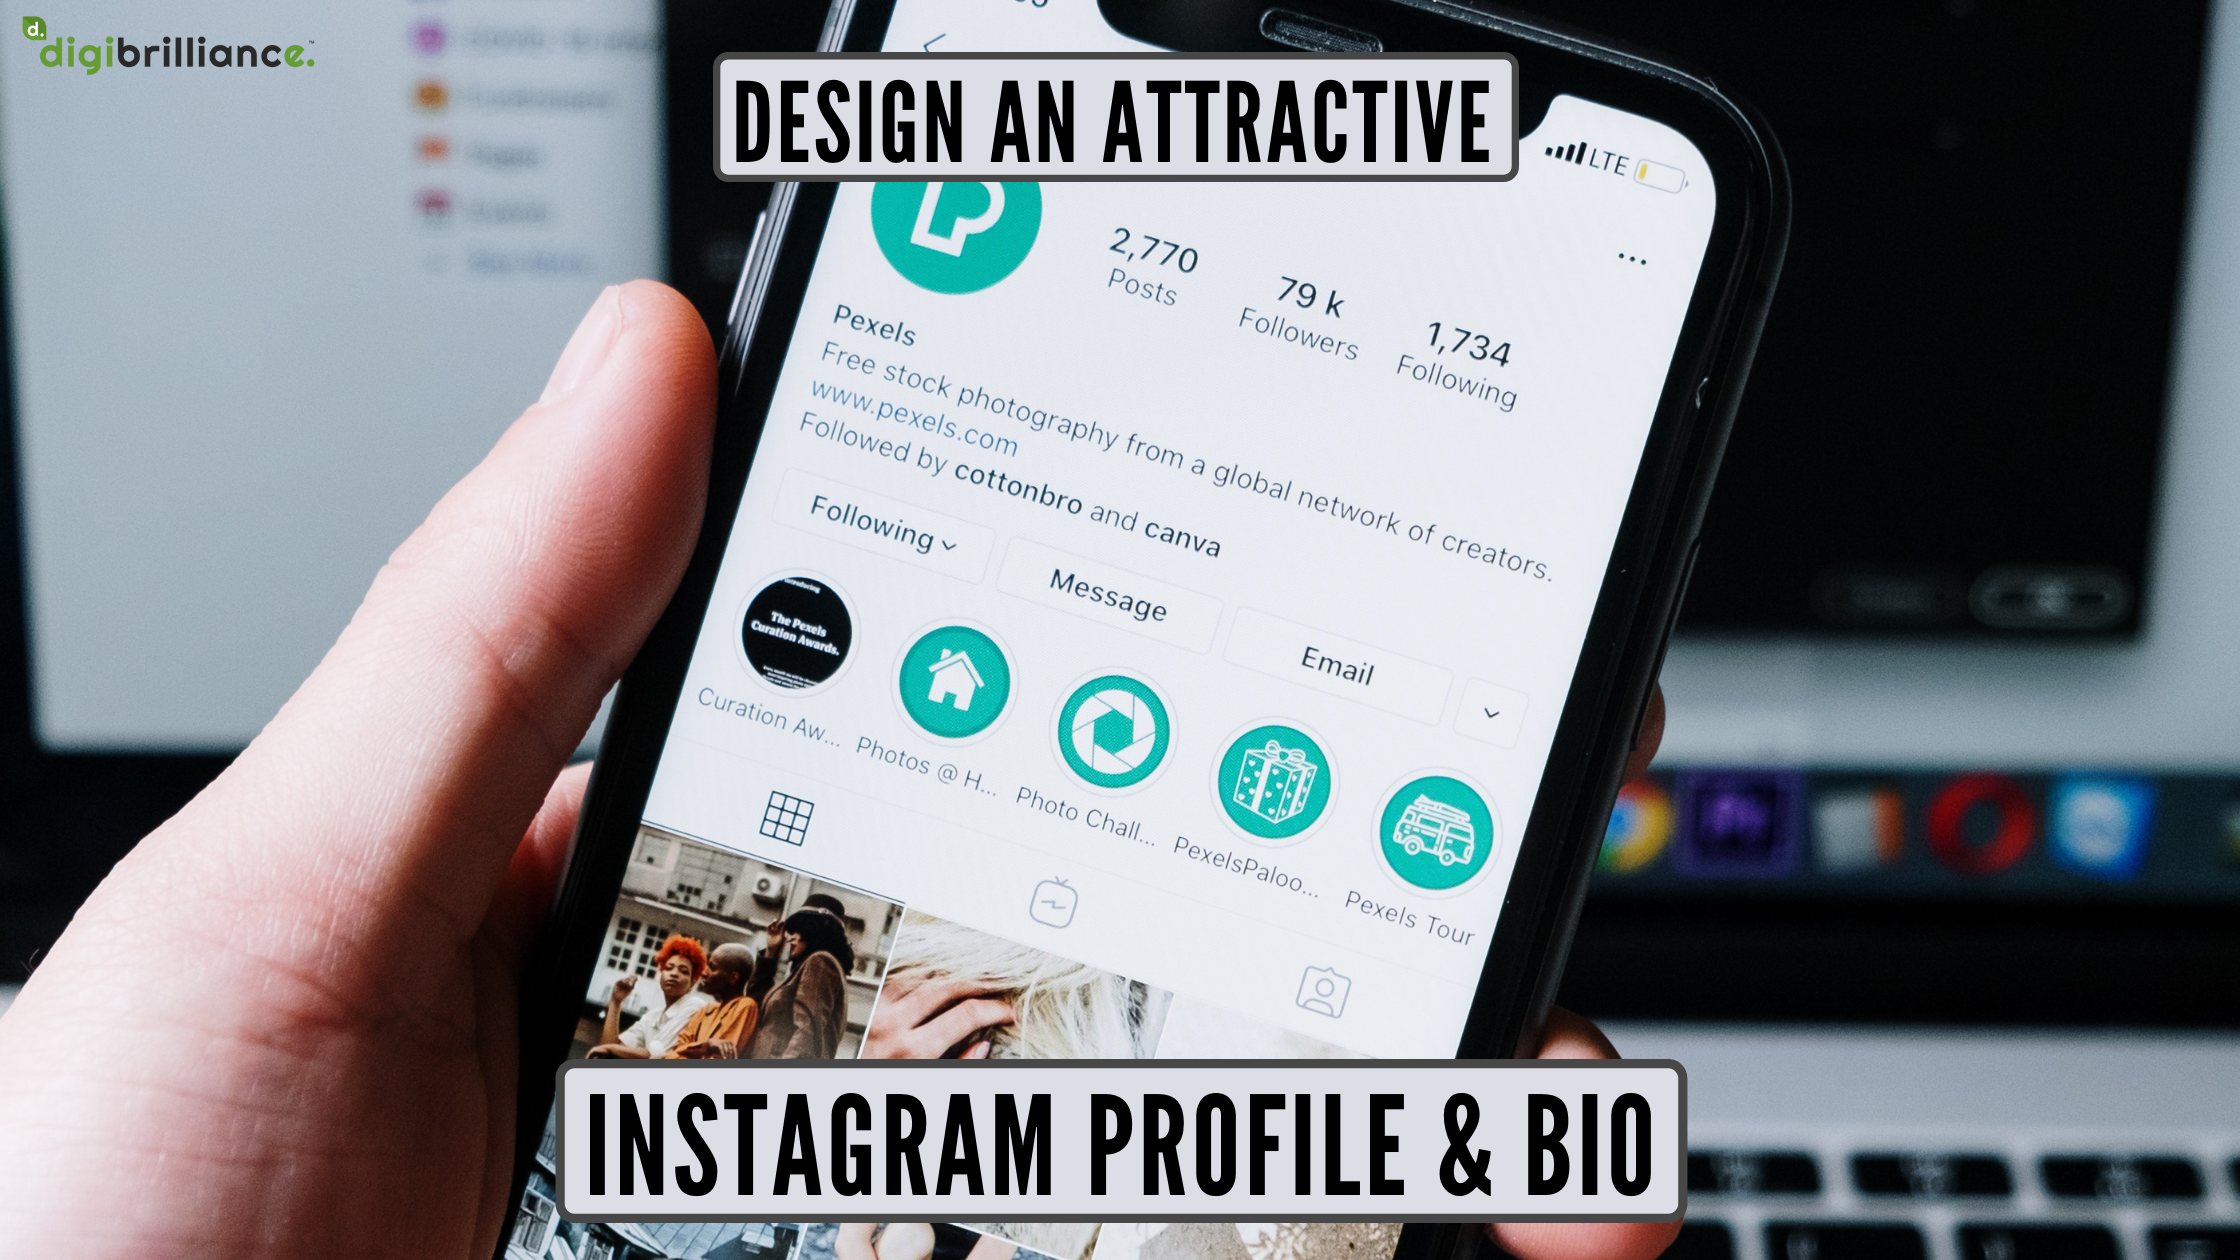 instagram marketing strategies